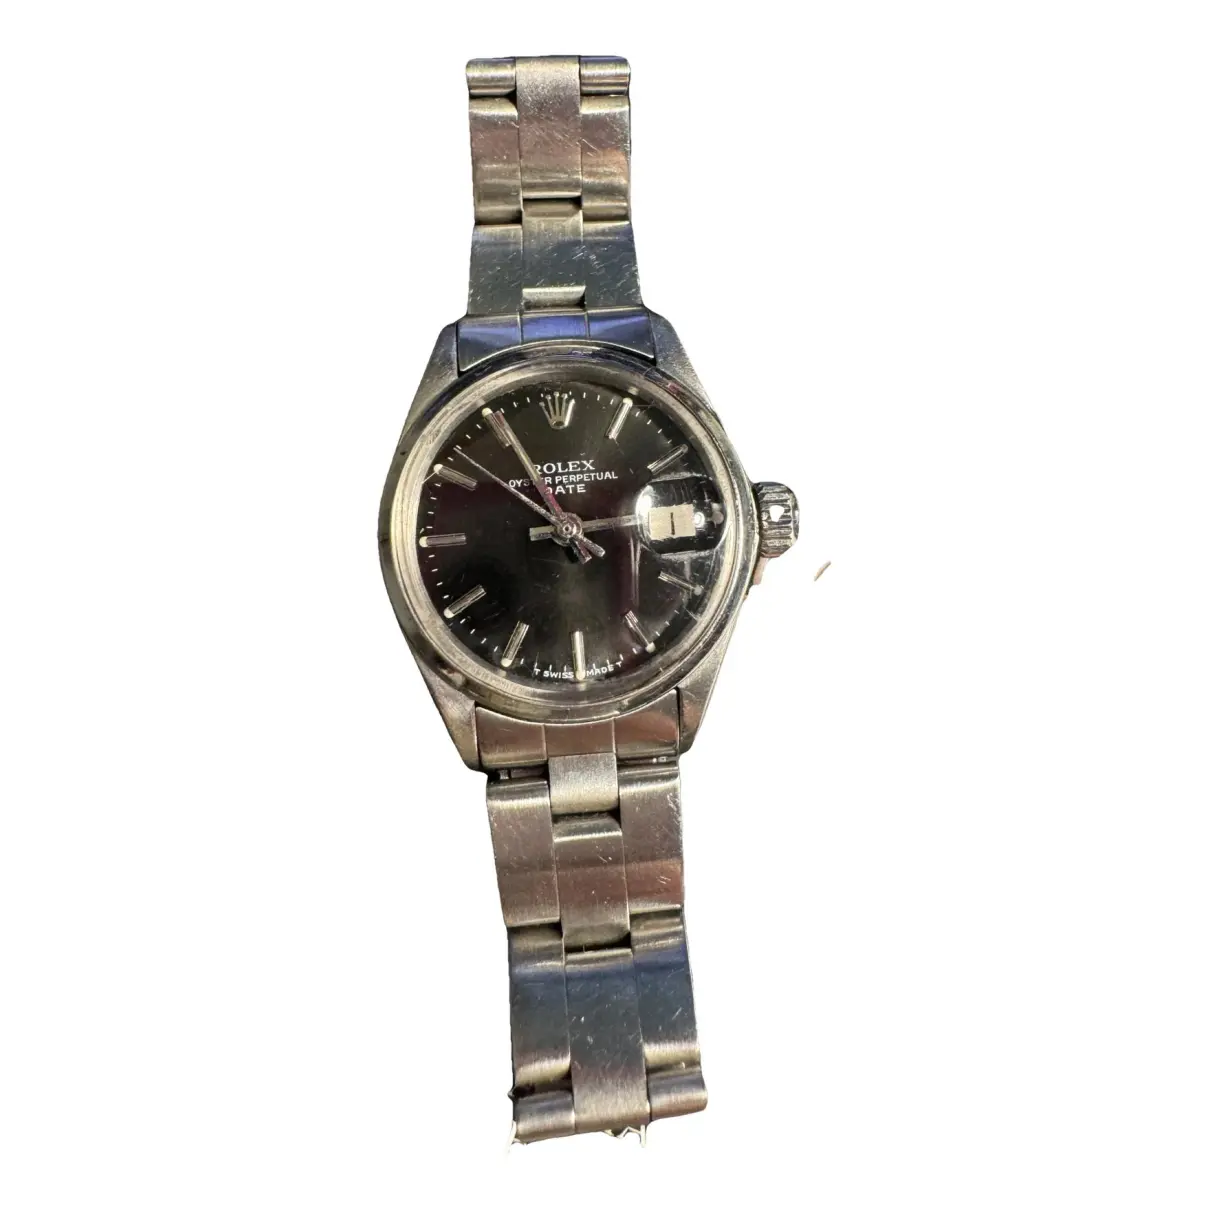 Lady DateJust 26mm watch